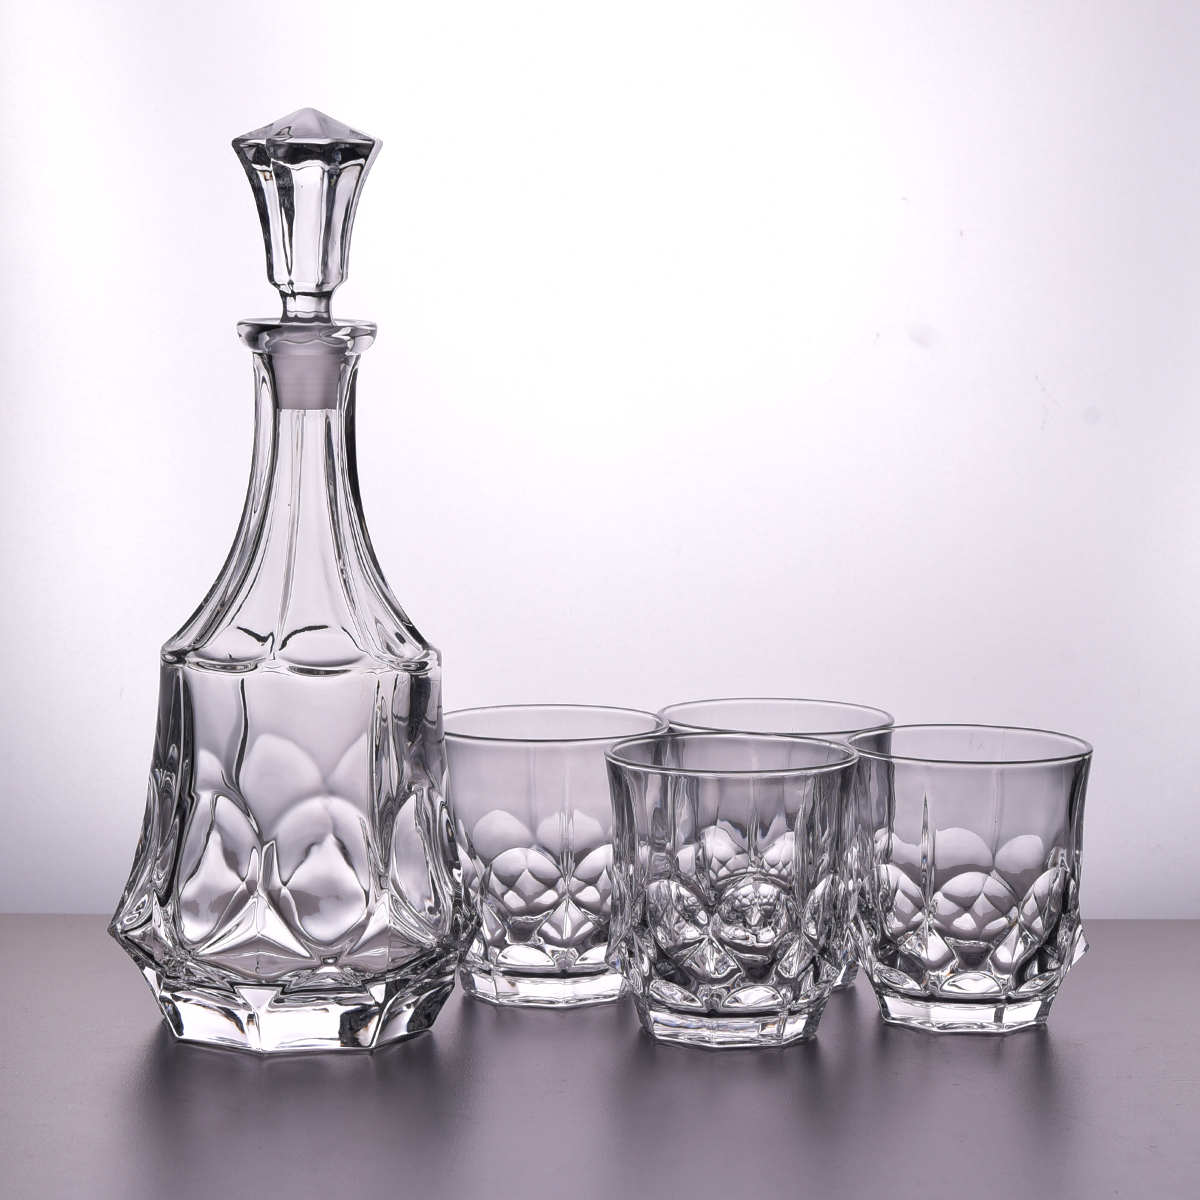 Hot Popular Crystal Glass Whisky Decanter Sets